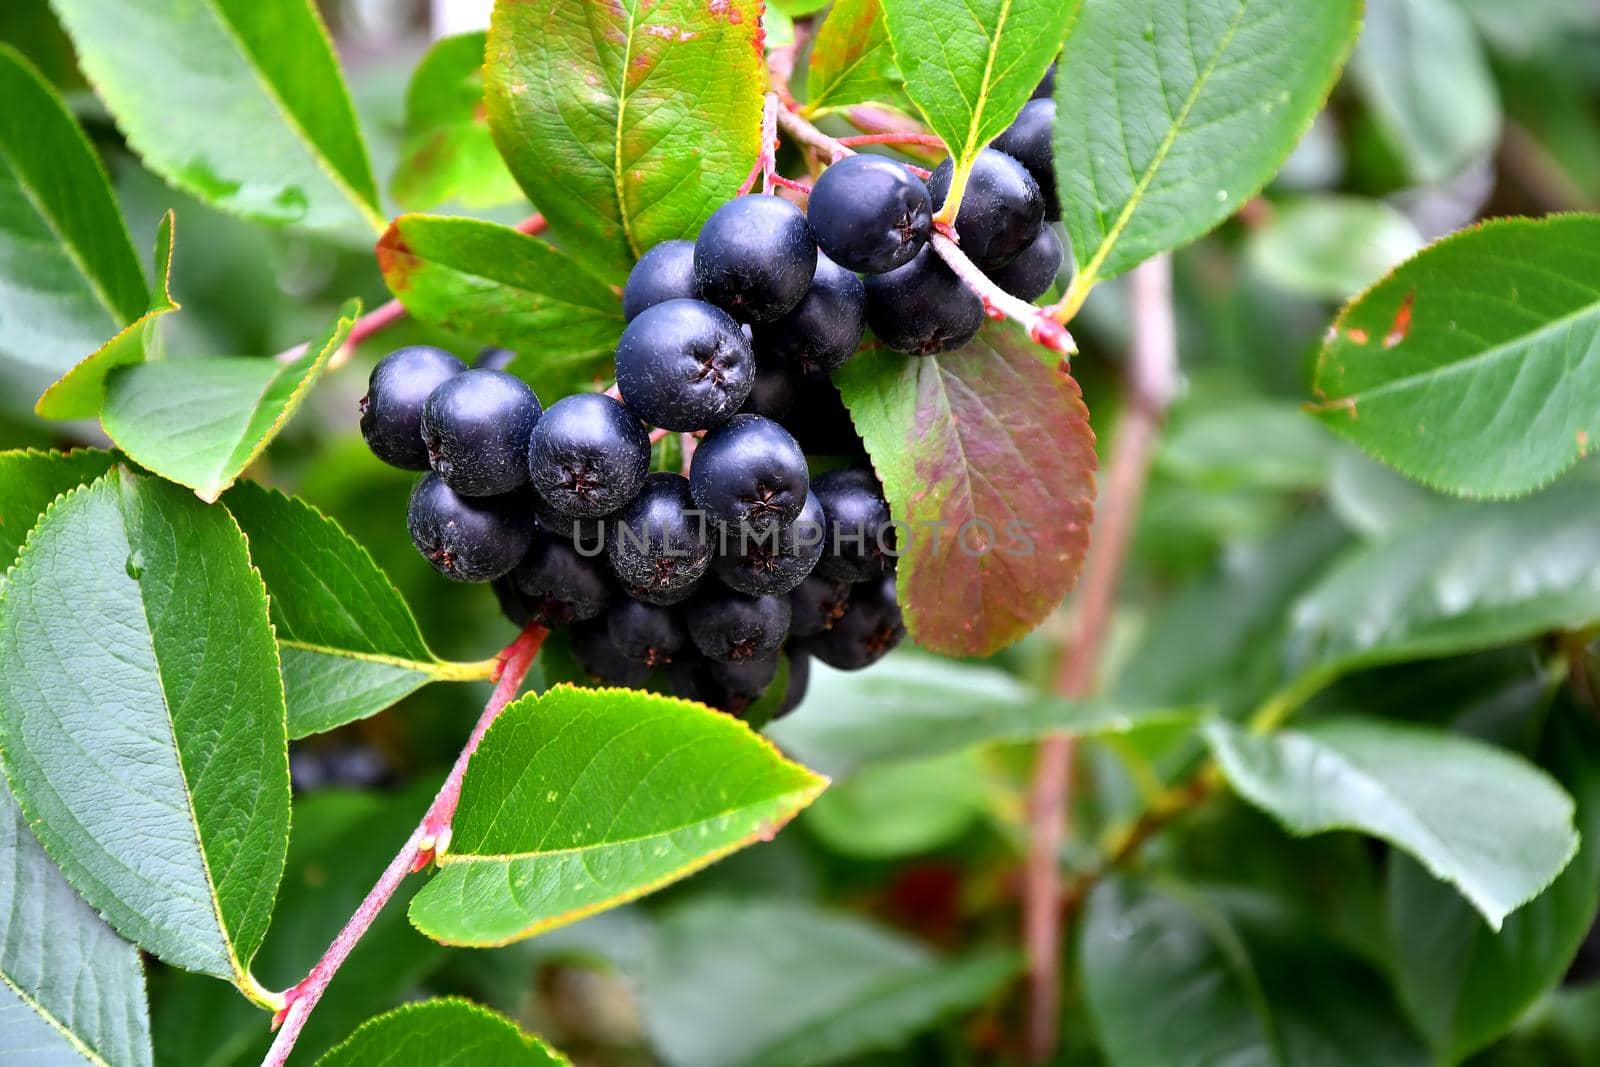 ripe Aronia berries on a tree in Germany by Jochen